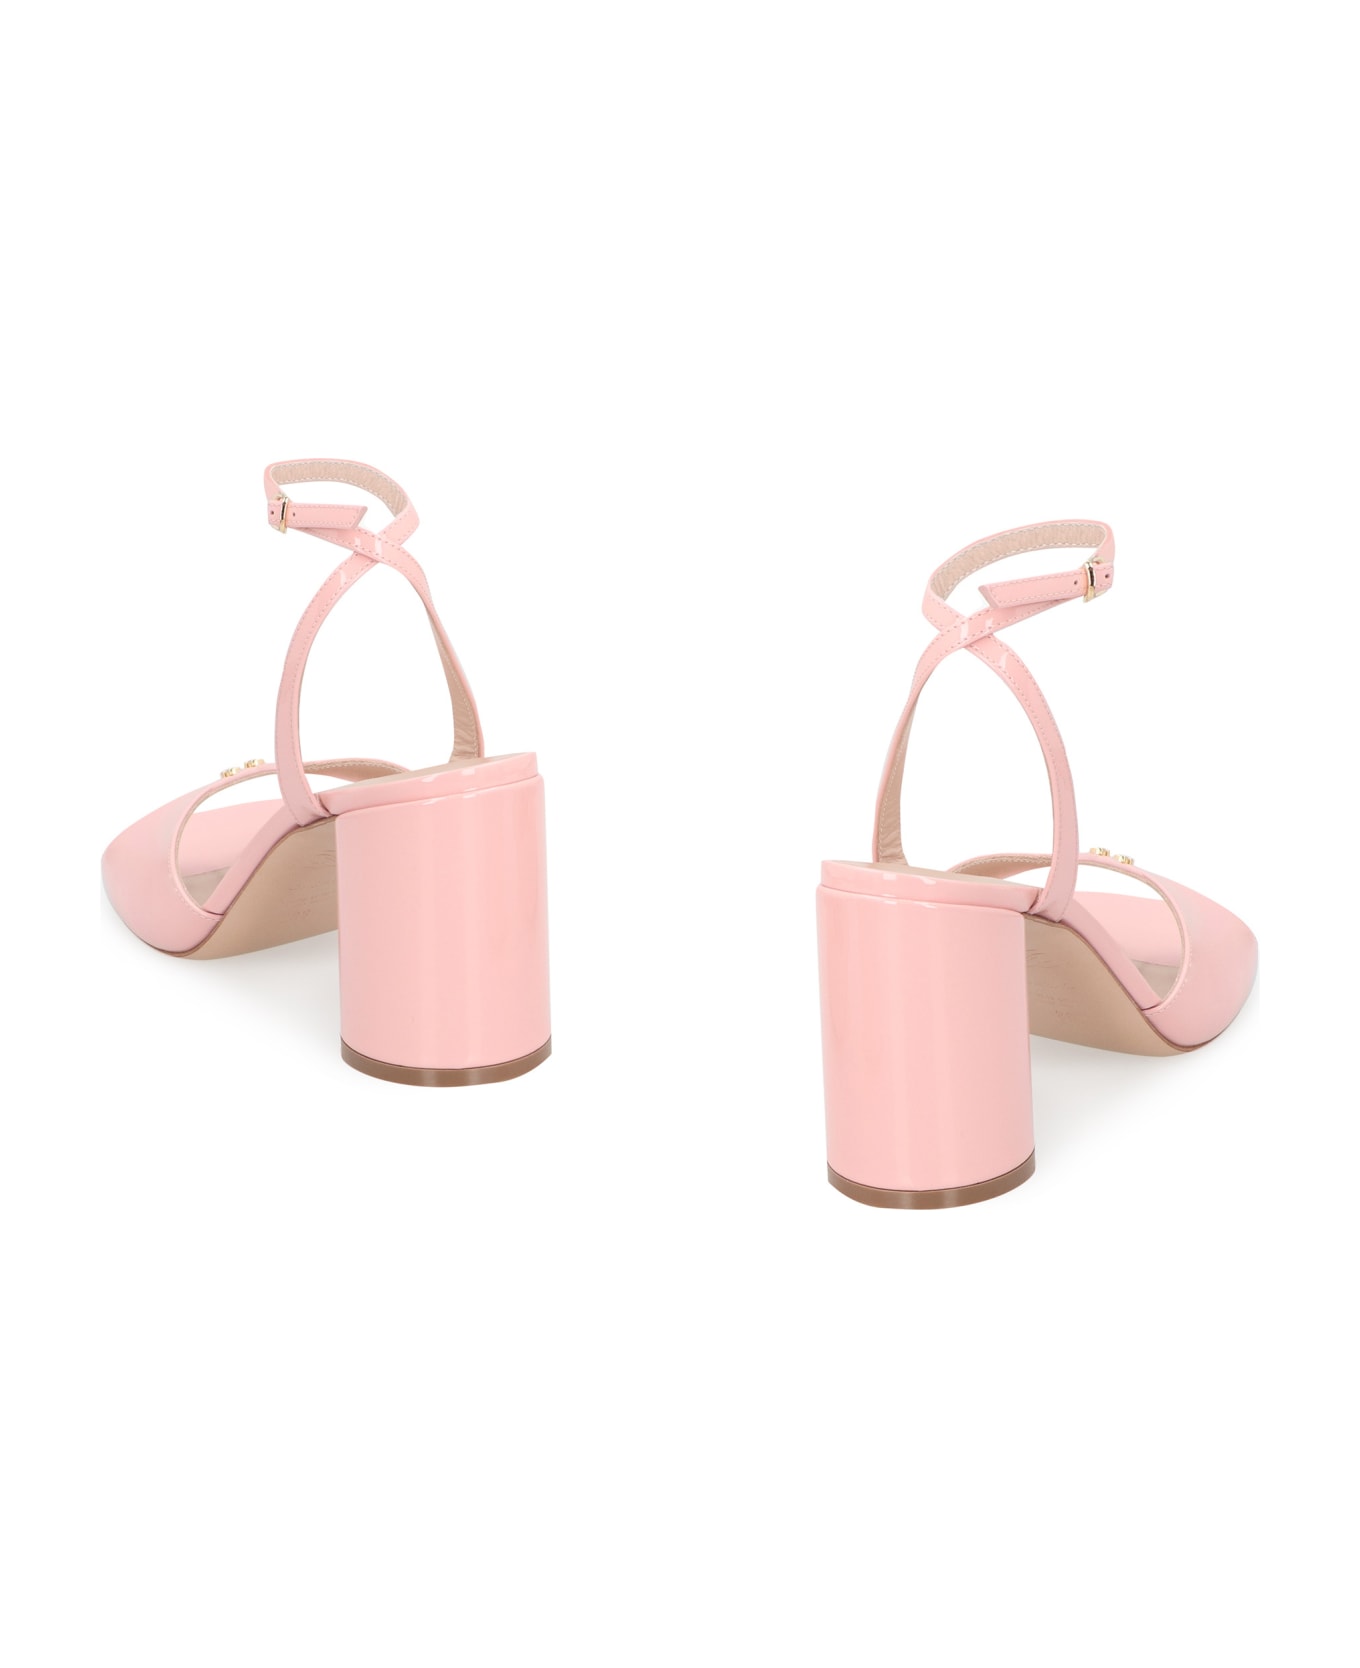 Casadei Tiffany Patent Leather Sandals - Pink サンダル